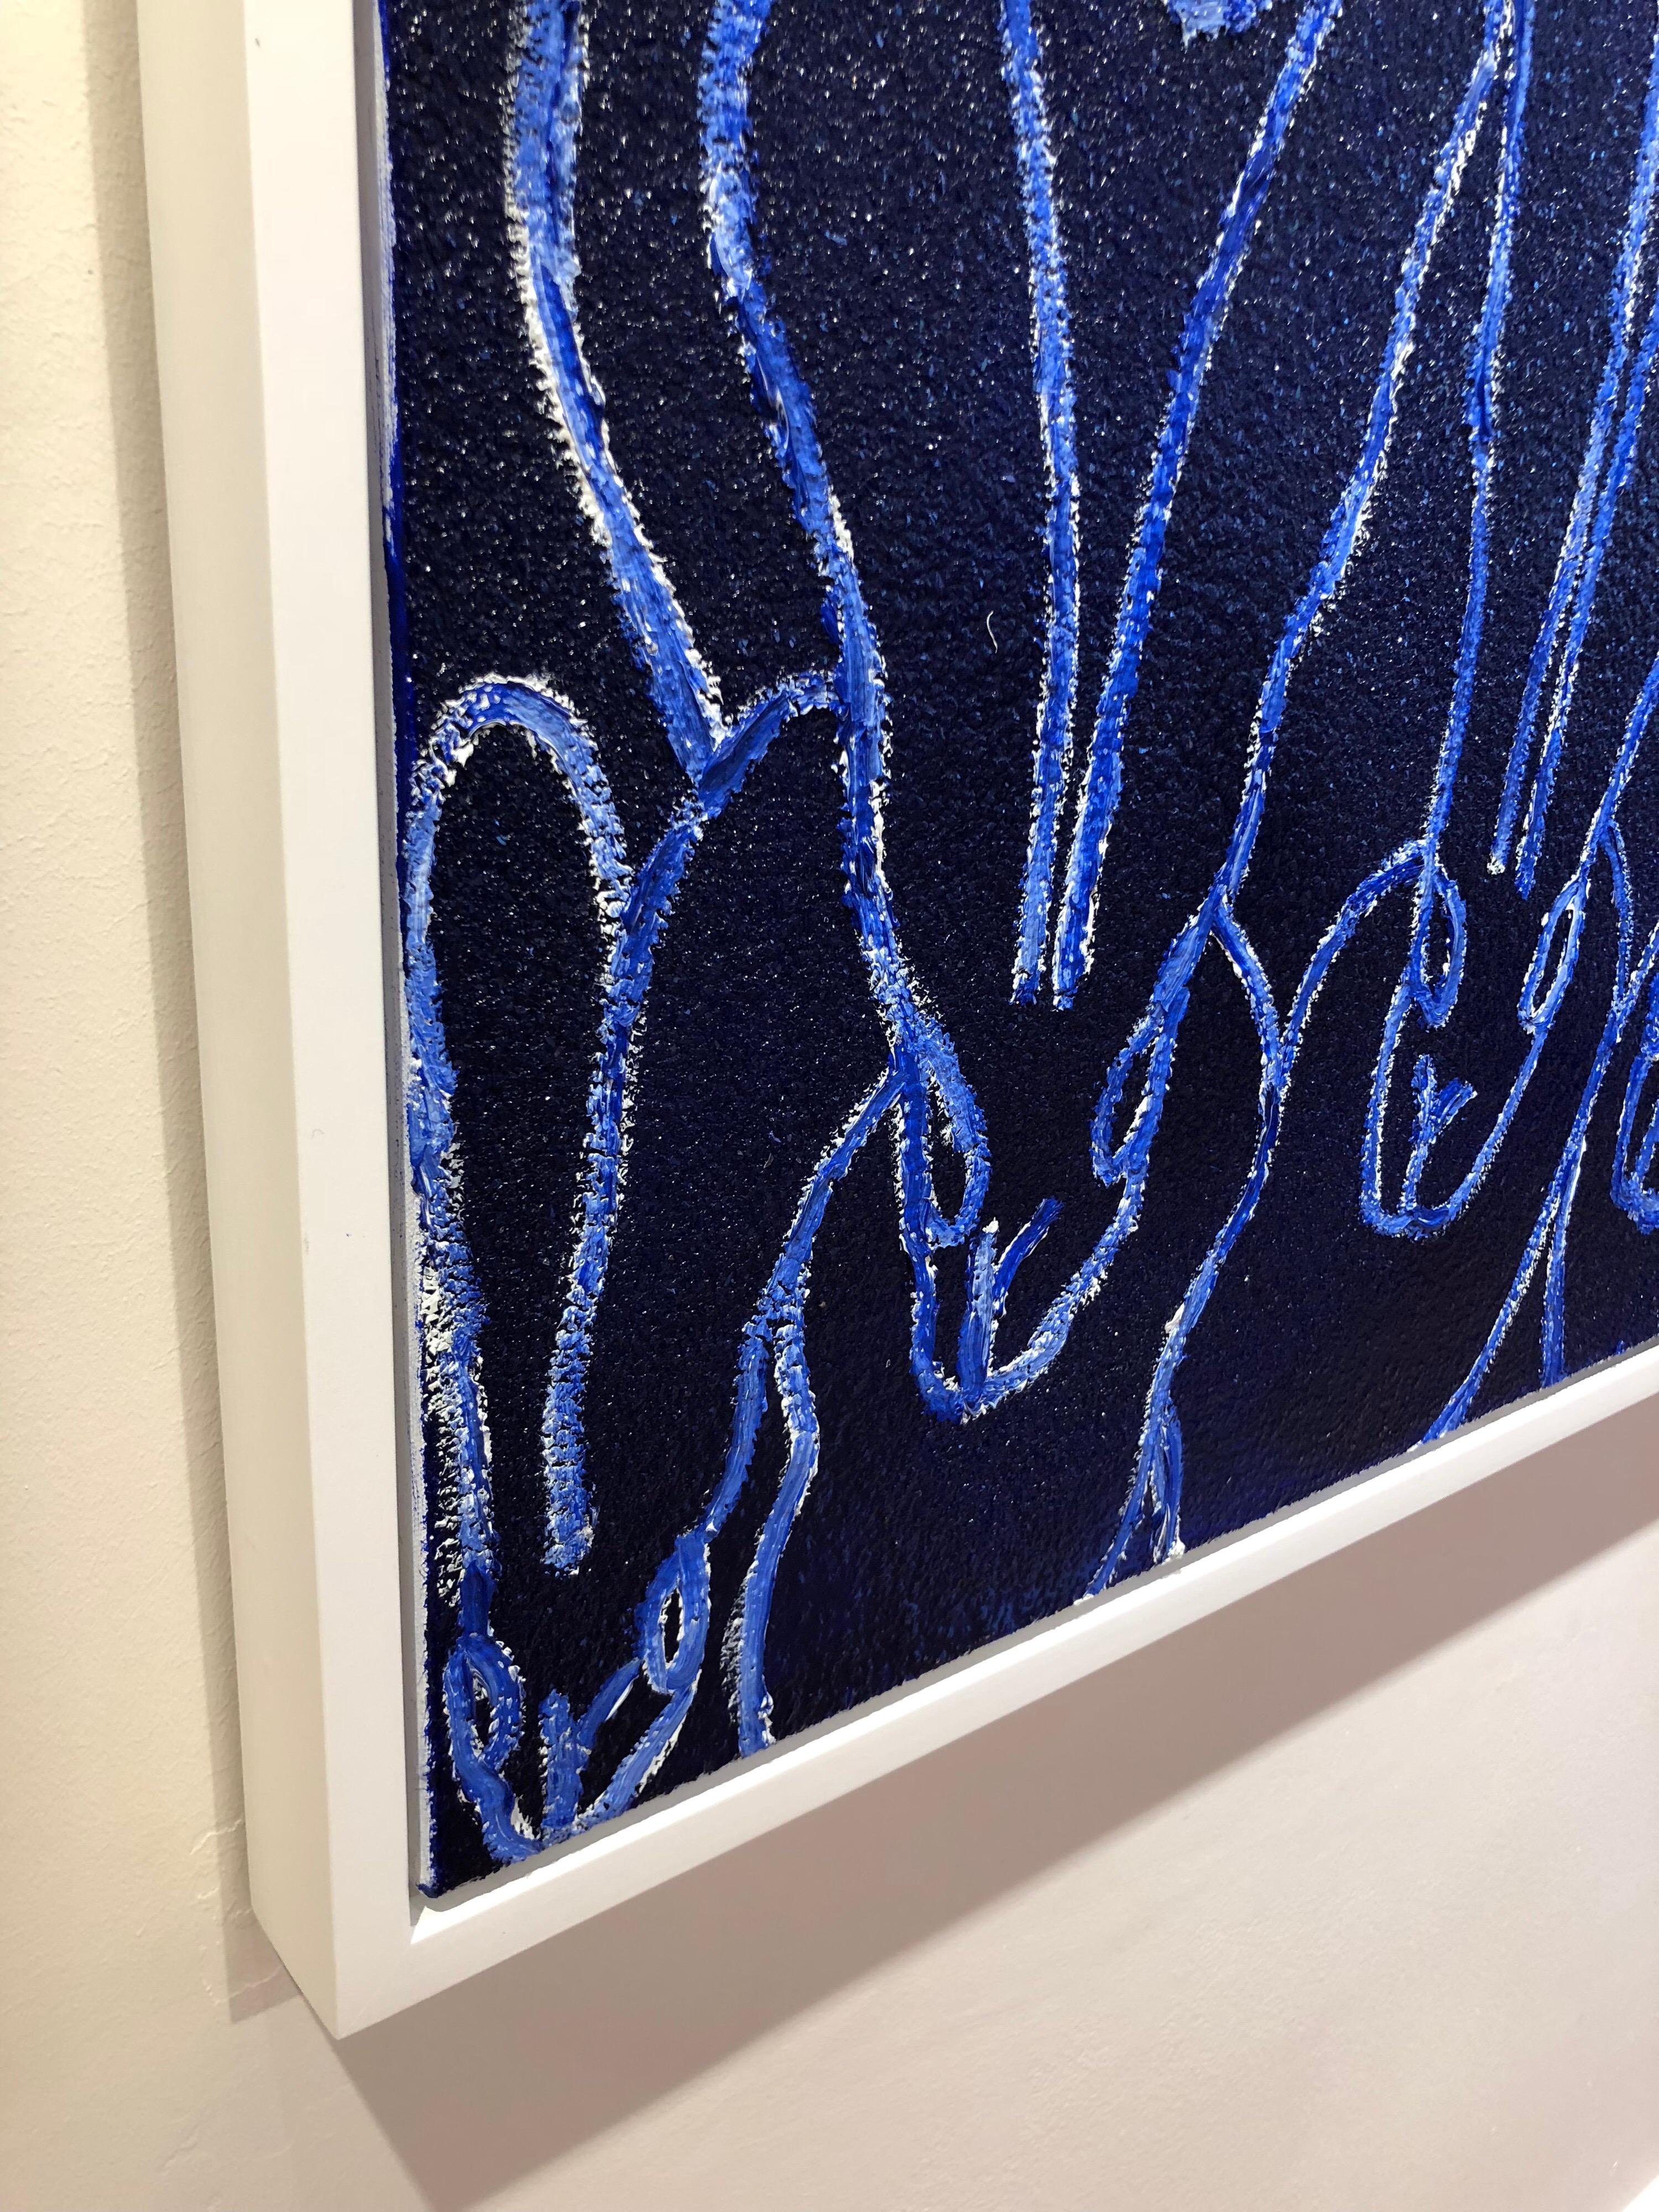 Blue Diamond Bunnies
2018
Oil & Acrylic with Diamond Dust on Canvas
48 x 48 inches unframed
Signed verso